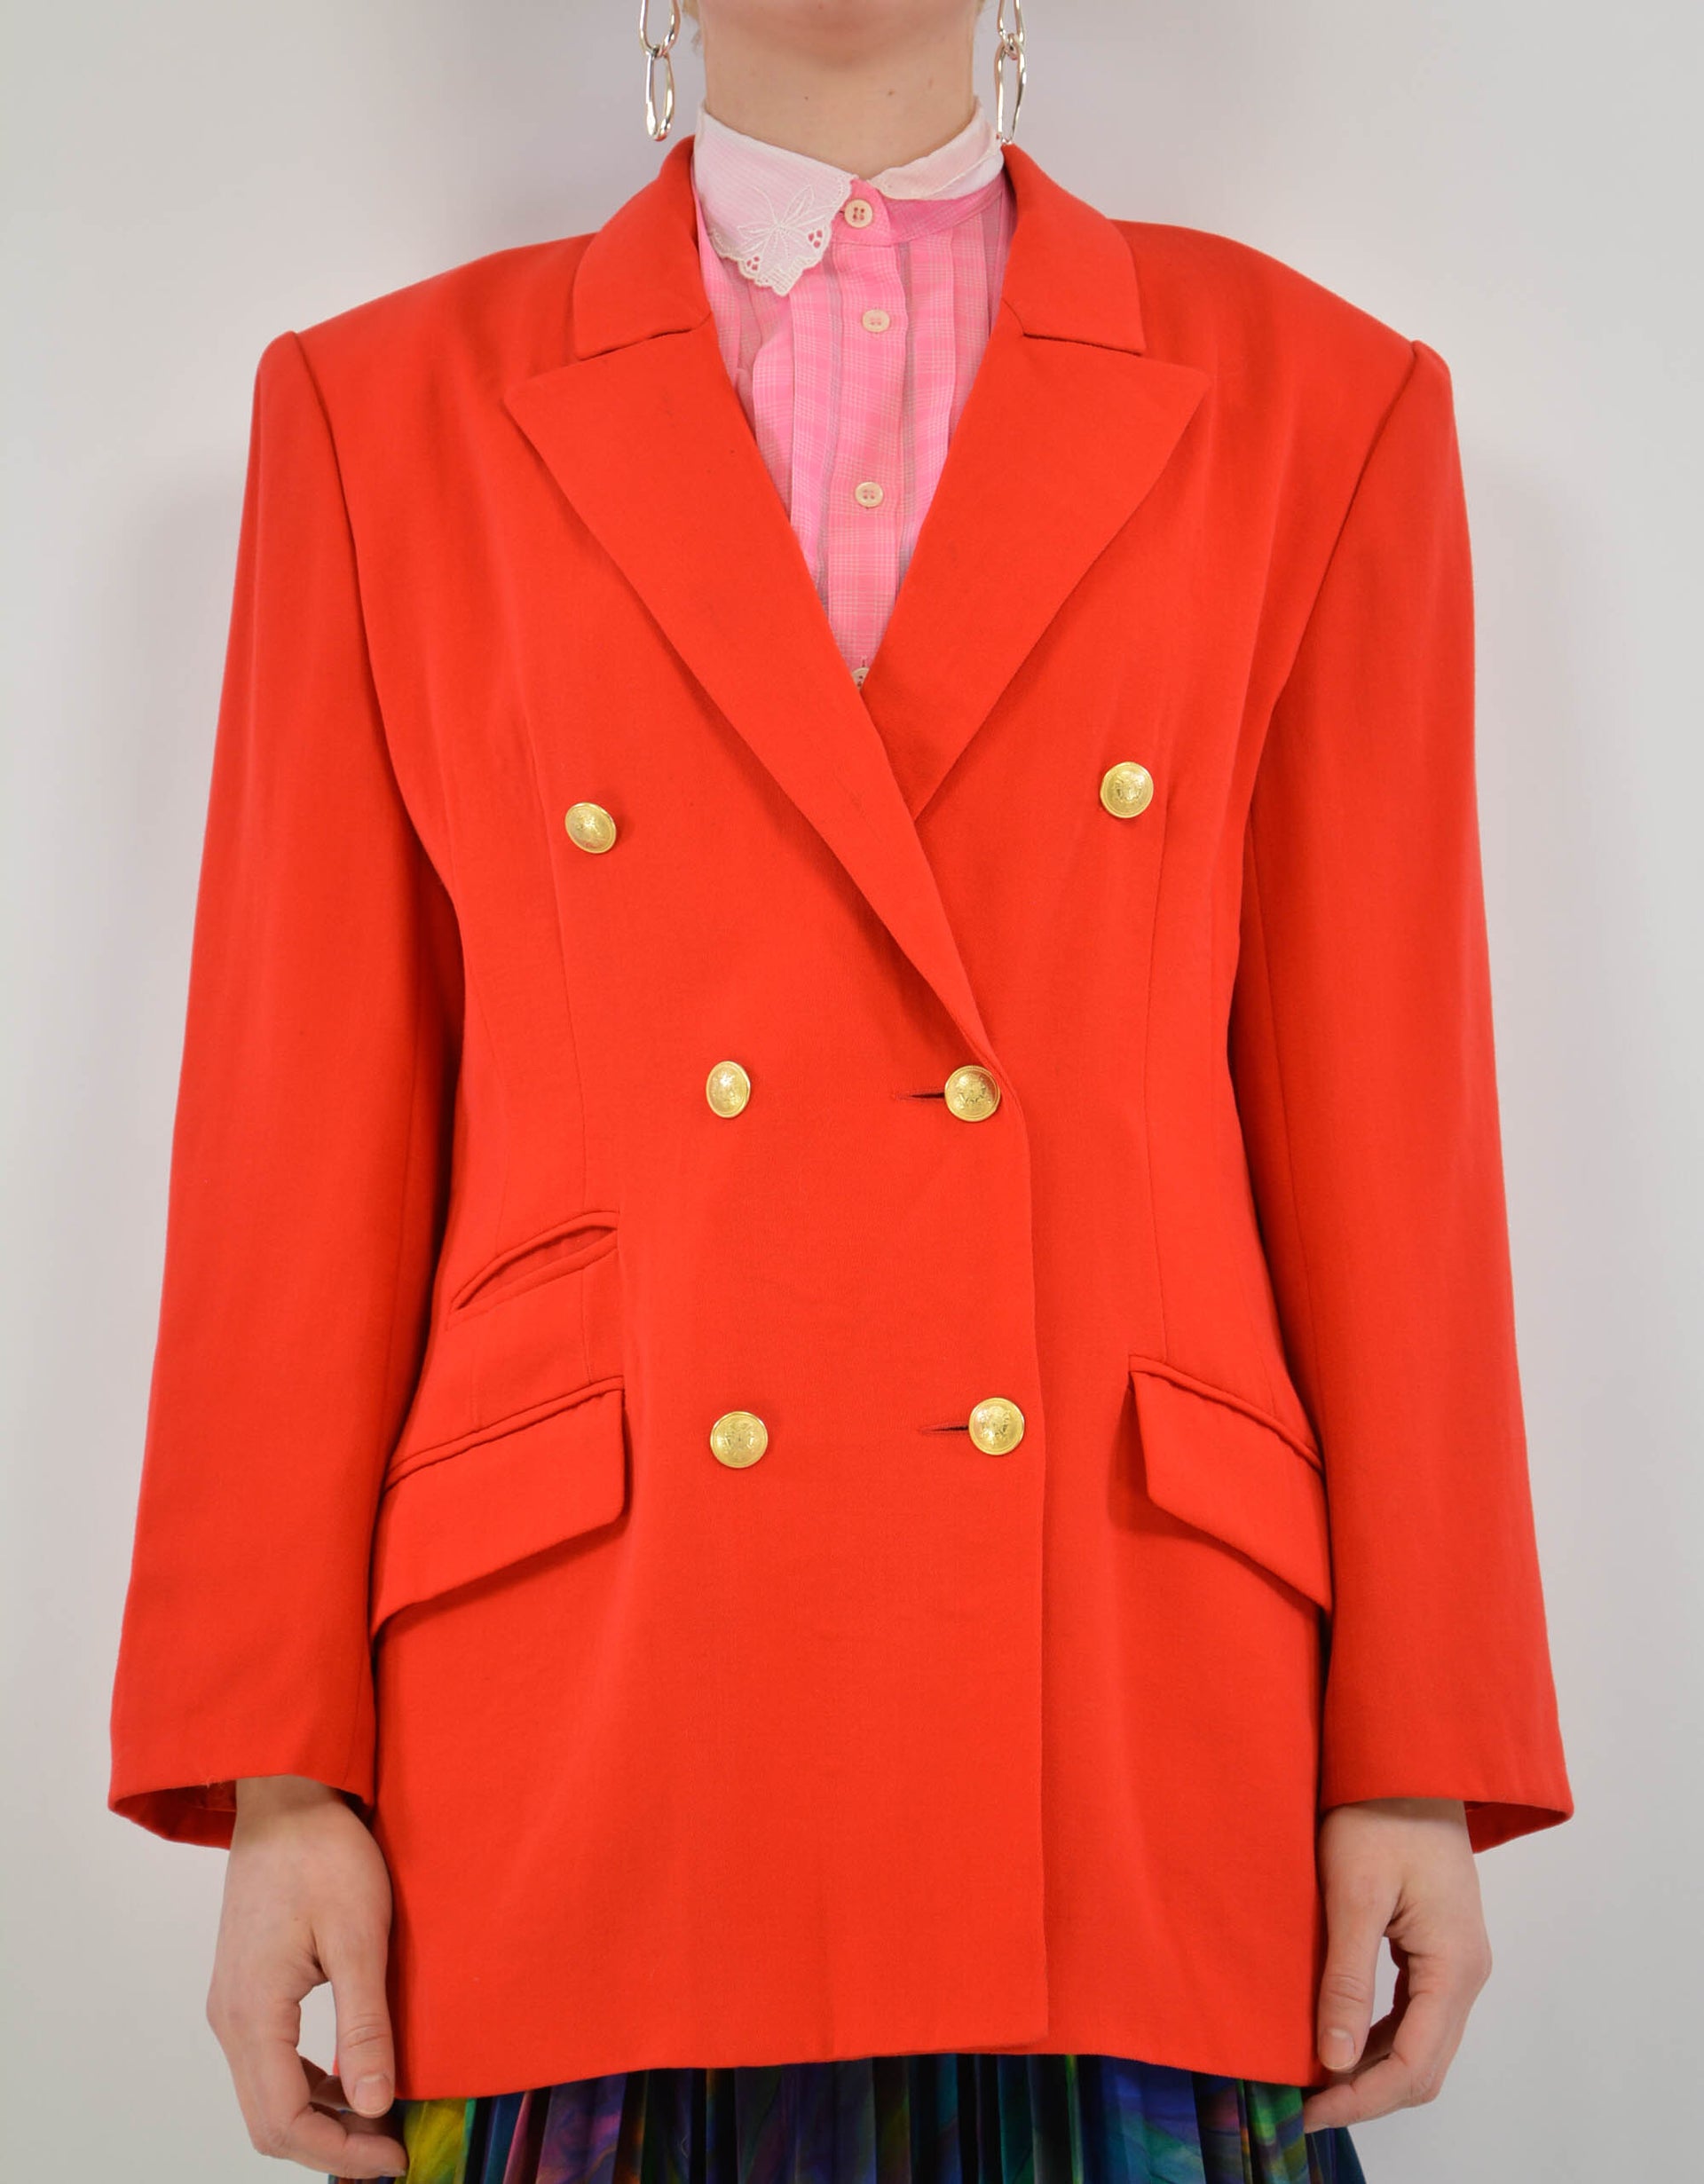 Red suit jacket - PICKNWEIGHT - VINTAGE KILO STORE